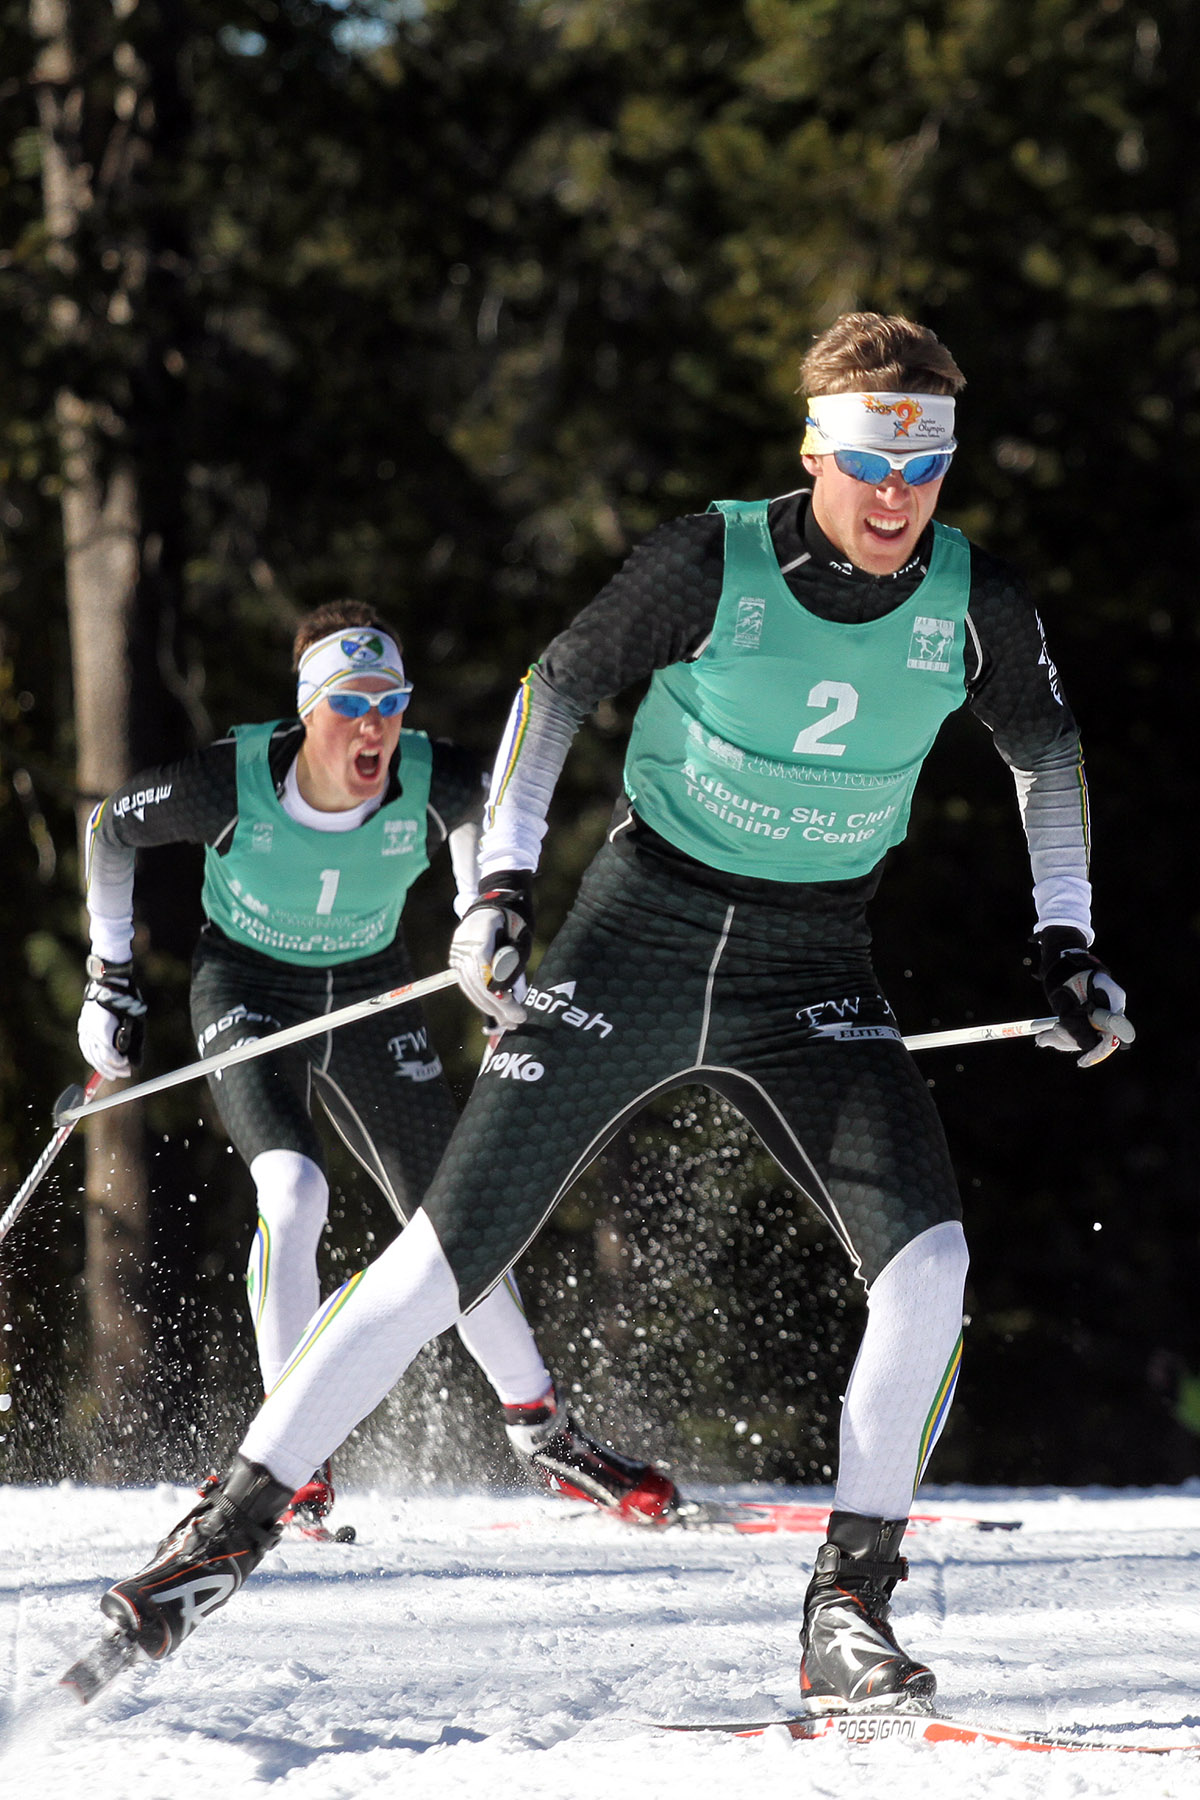 Spencer Eusden (l) and Patrick Johnson (r) racing at the Auburn Ski Club in 2013. (Photo: Mark Nadell/MacBeth Graphics)